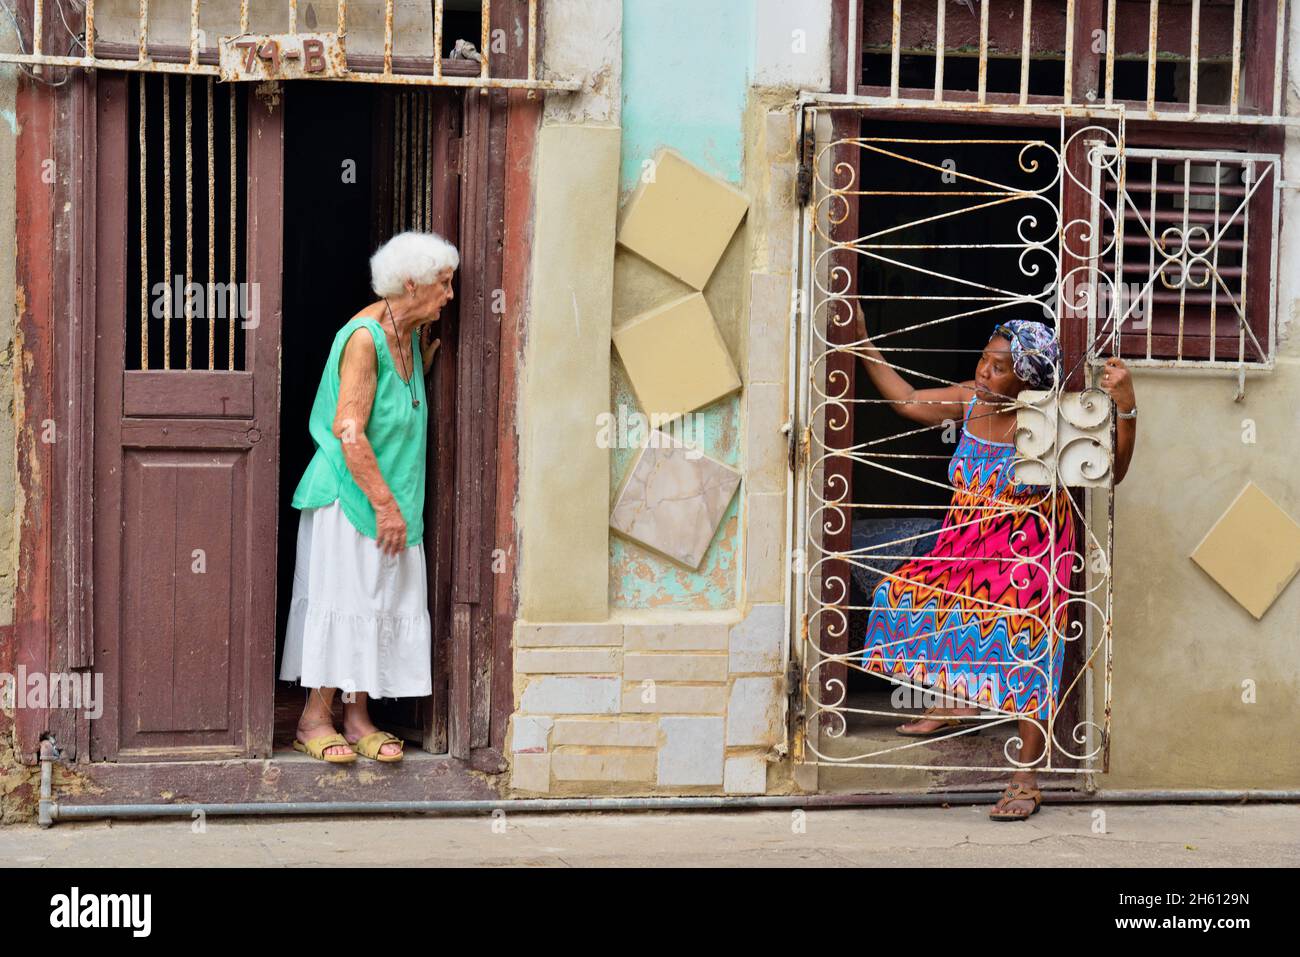 Street scene in central Havana- Two women conversing, La Habana (Havana), Habana, Cuba Stock Photo